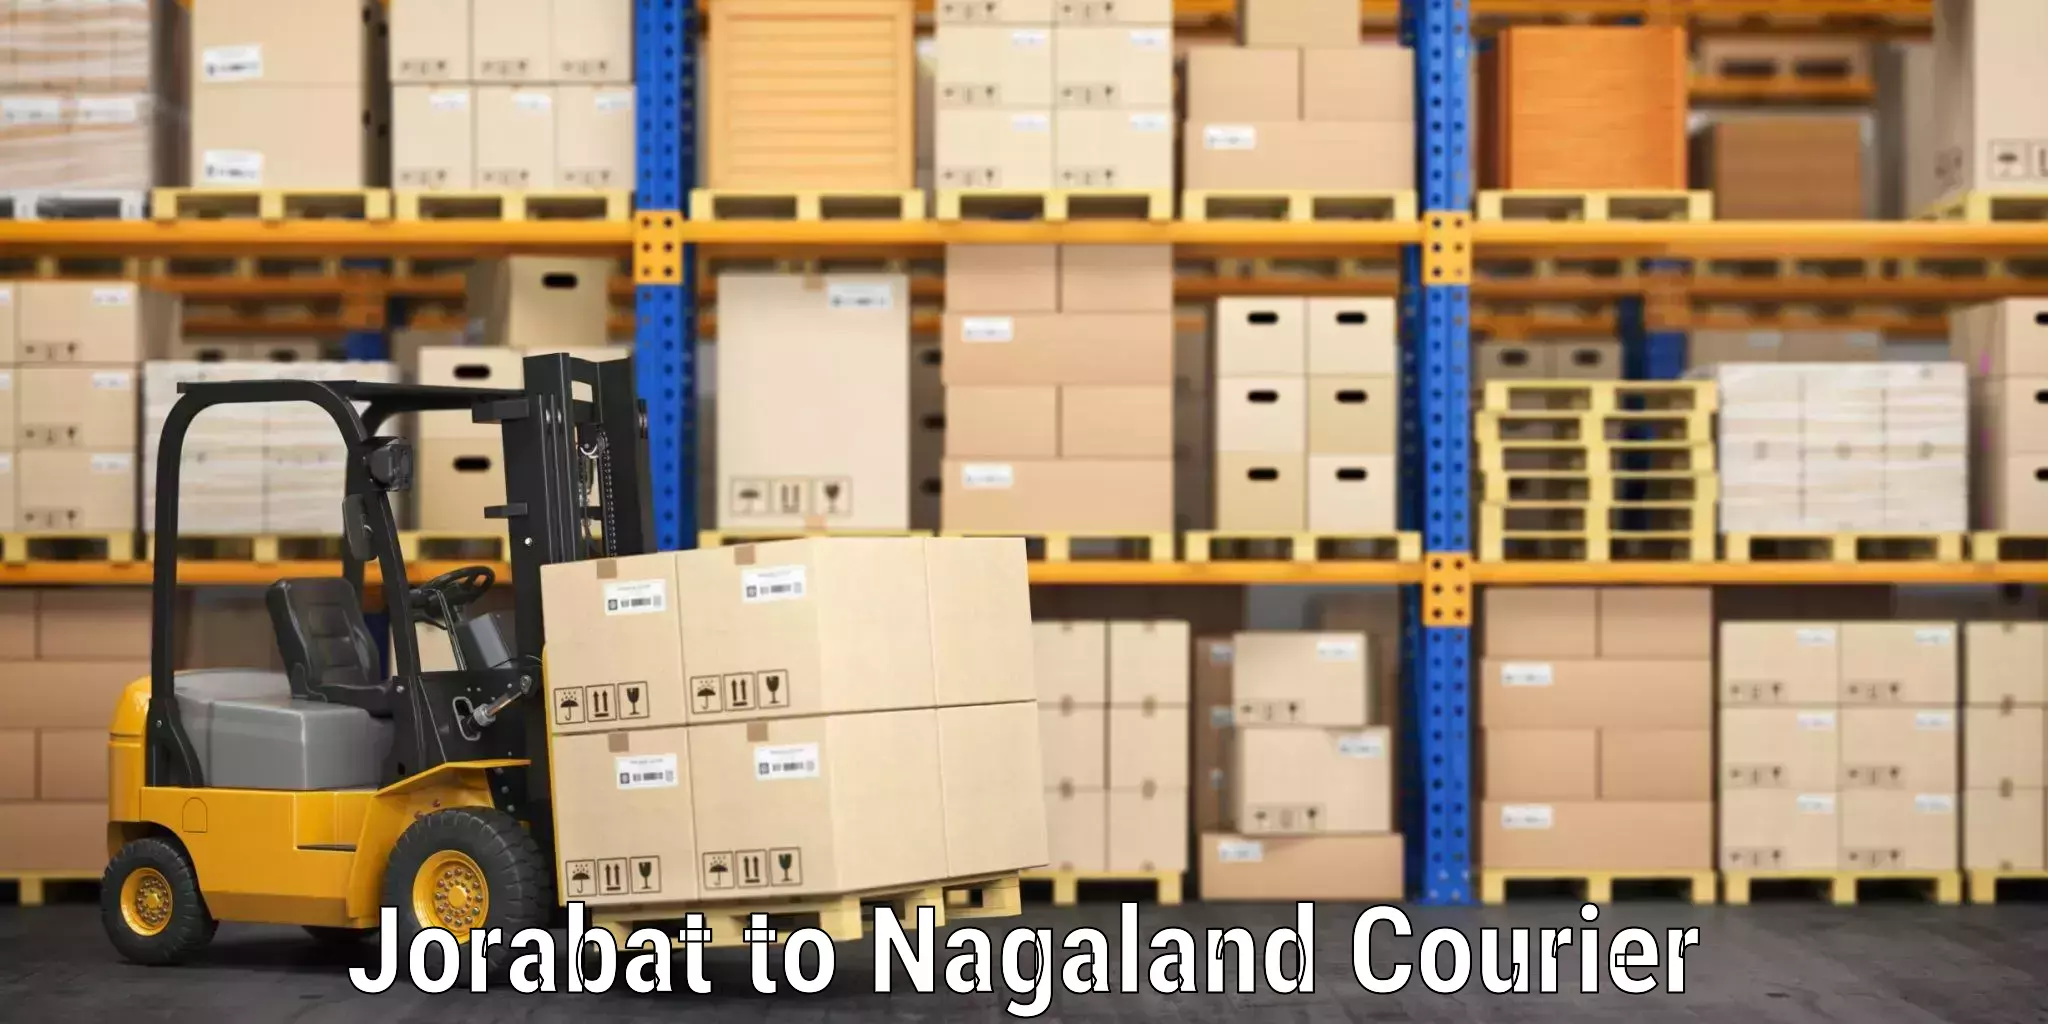 Hassle-free luggage shipping in Jorabat to Nagaland